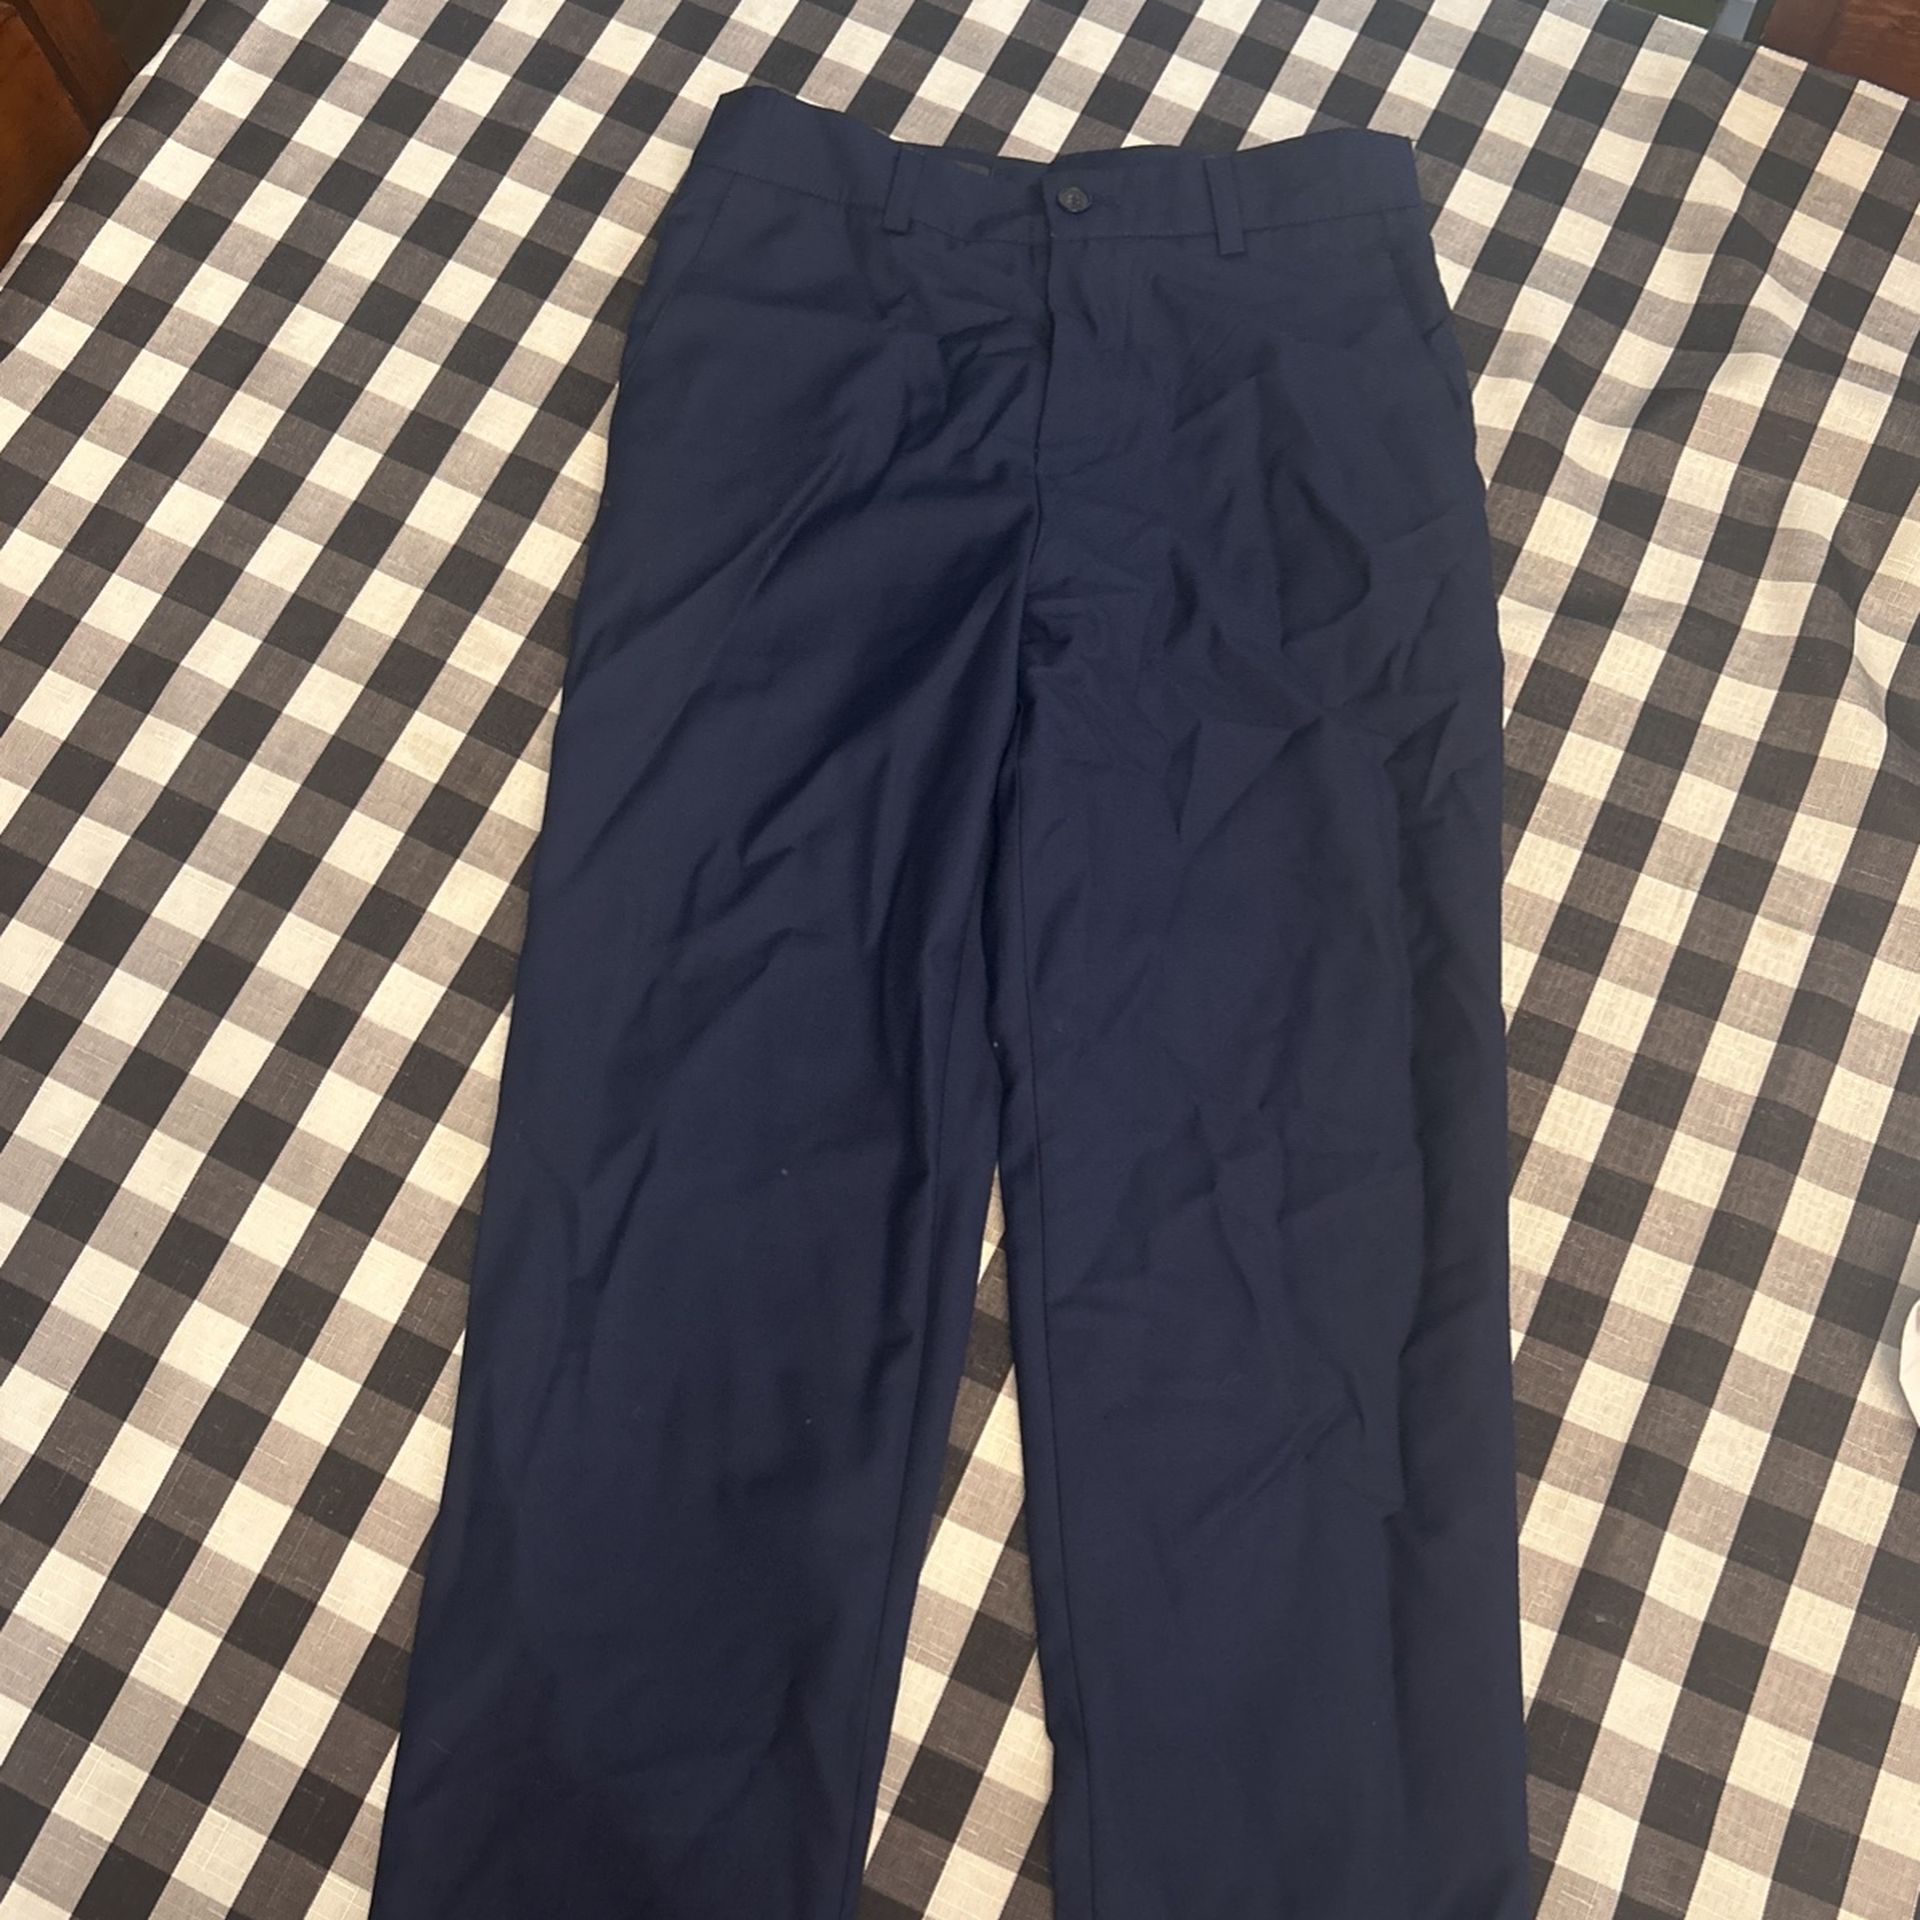 Boys Size 8 Navy Blue Dress Pants